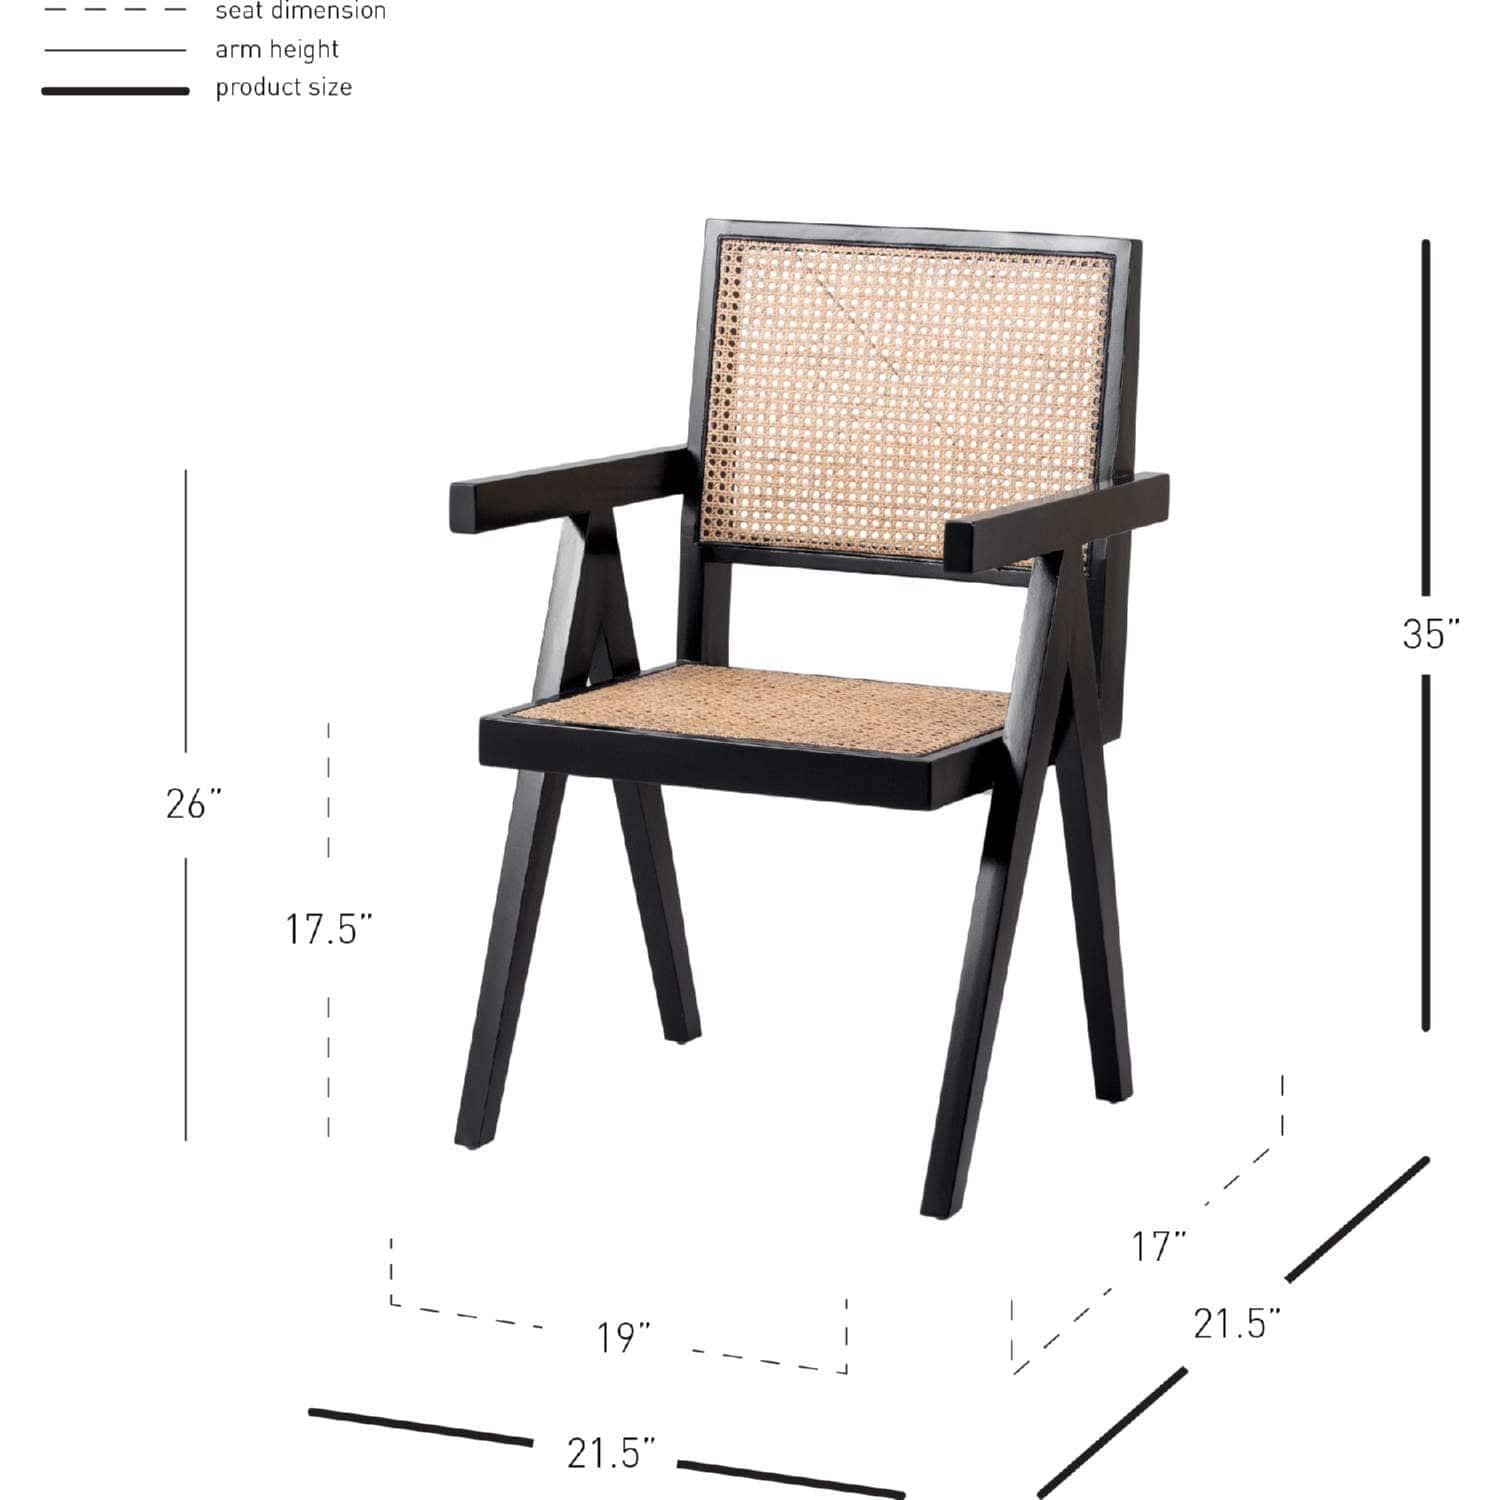 NPD Furniture NPD - Bordeaux Mahogany Rattan Dining Side Chair, Black/
Natural | 4900019